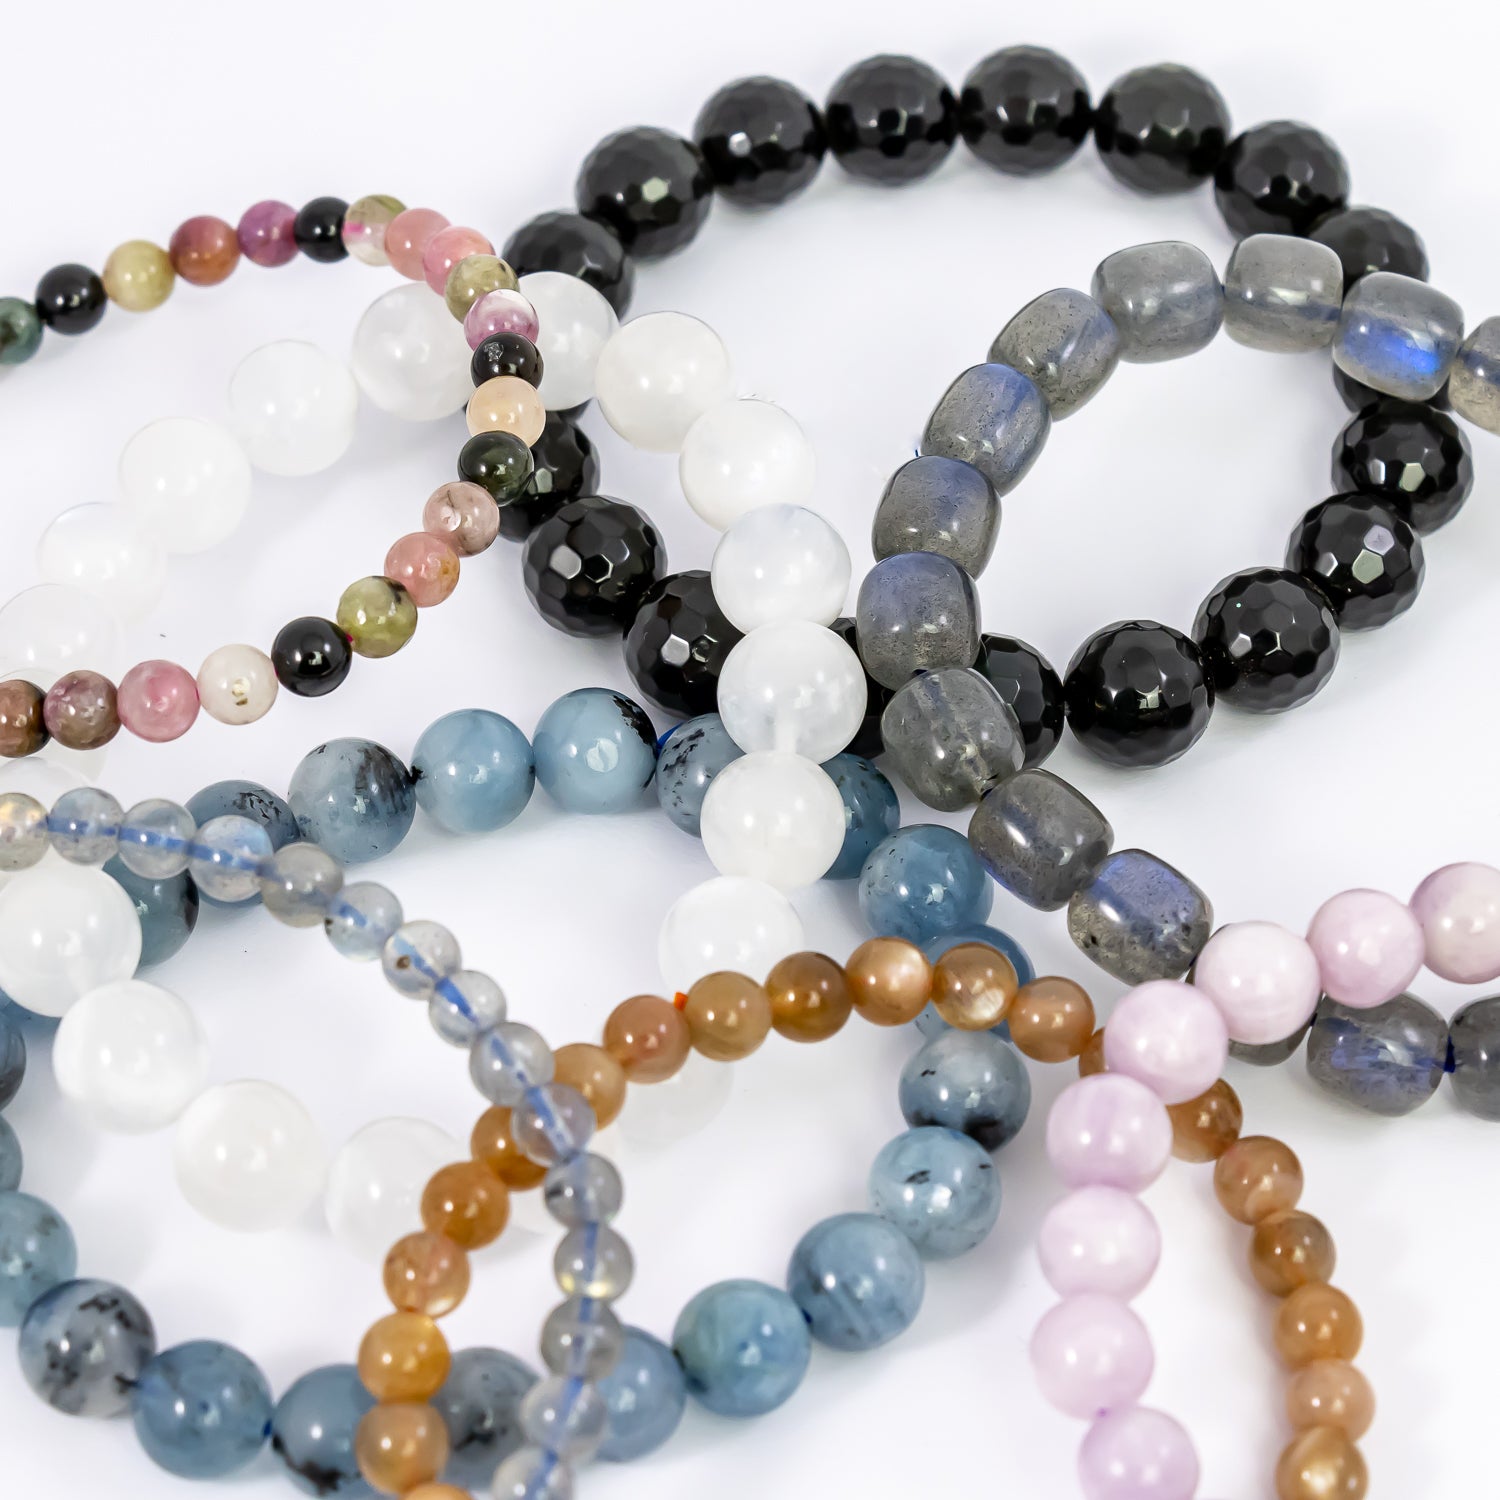 crystal bracelets (kunzite, labradorite large, labradorite small, peach moonstone, aquamarine, faceted black obsidian, moonstone, watermelon tourmaline) close-up.